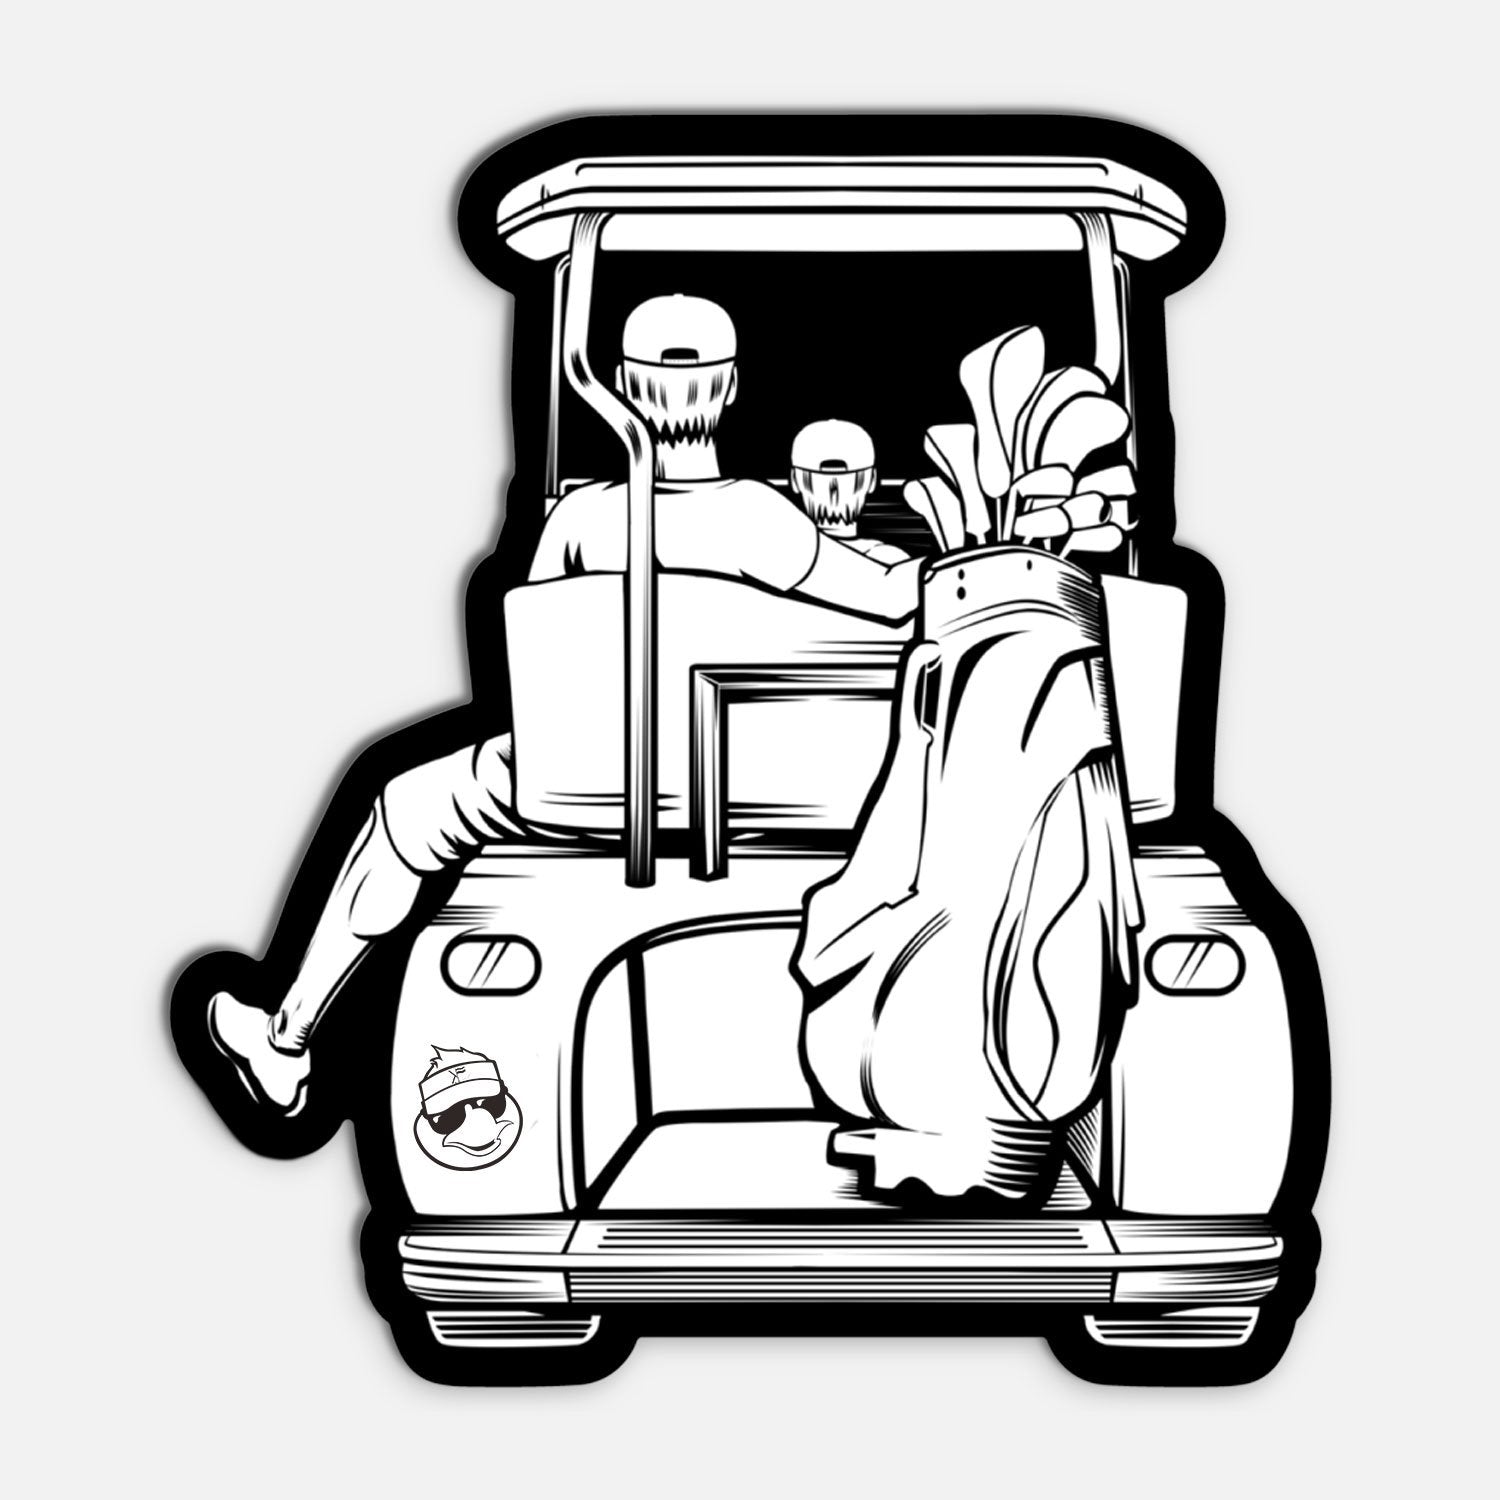 Dad & Son Golf Cart Sticker - F. King Golf